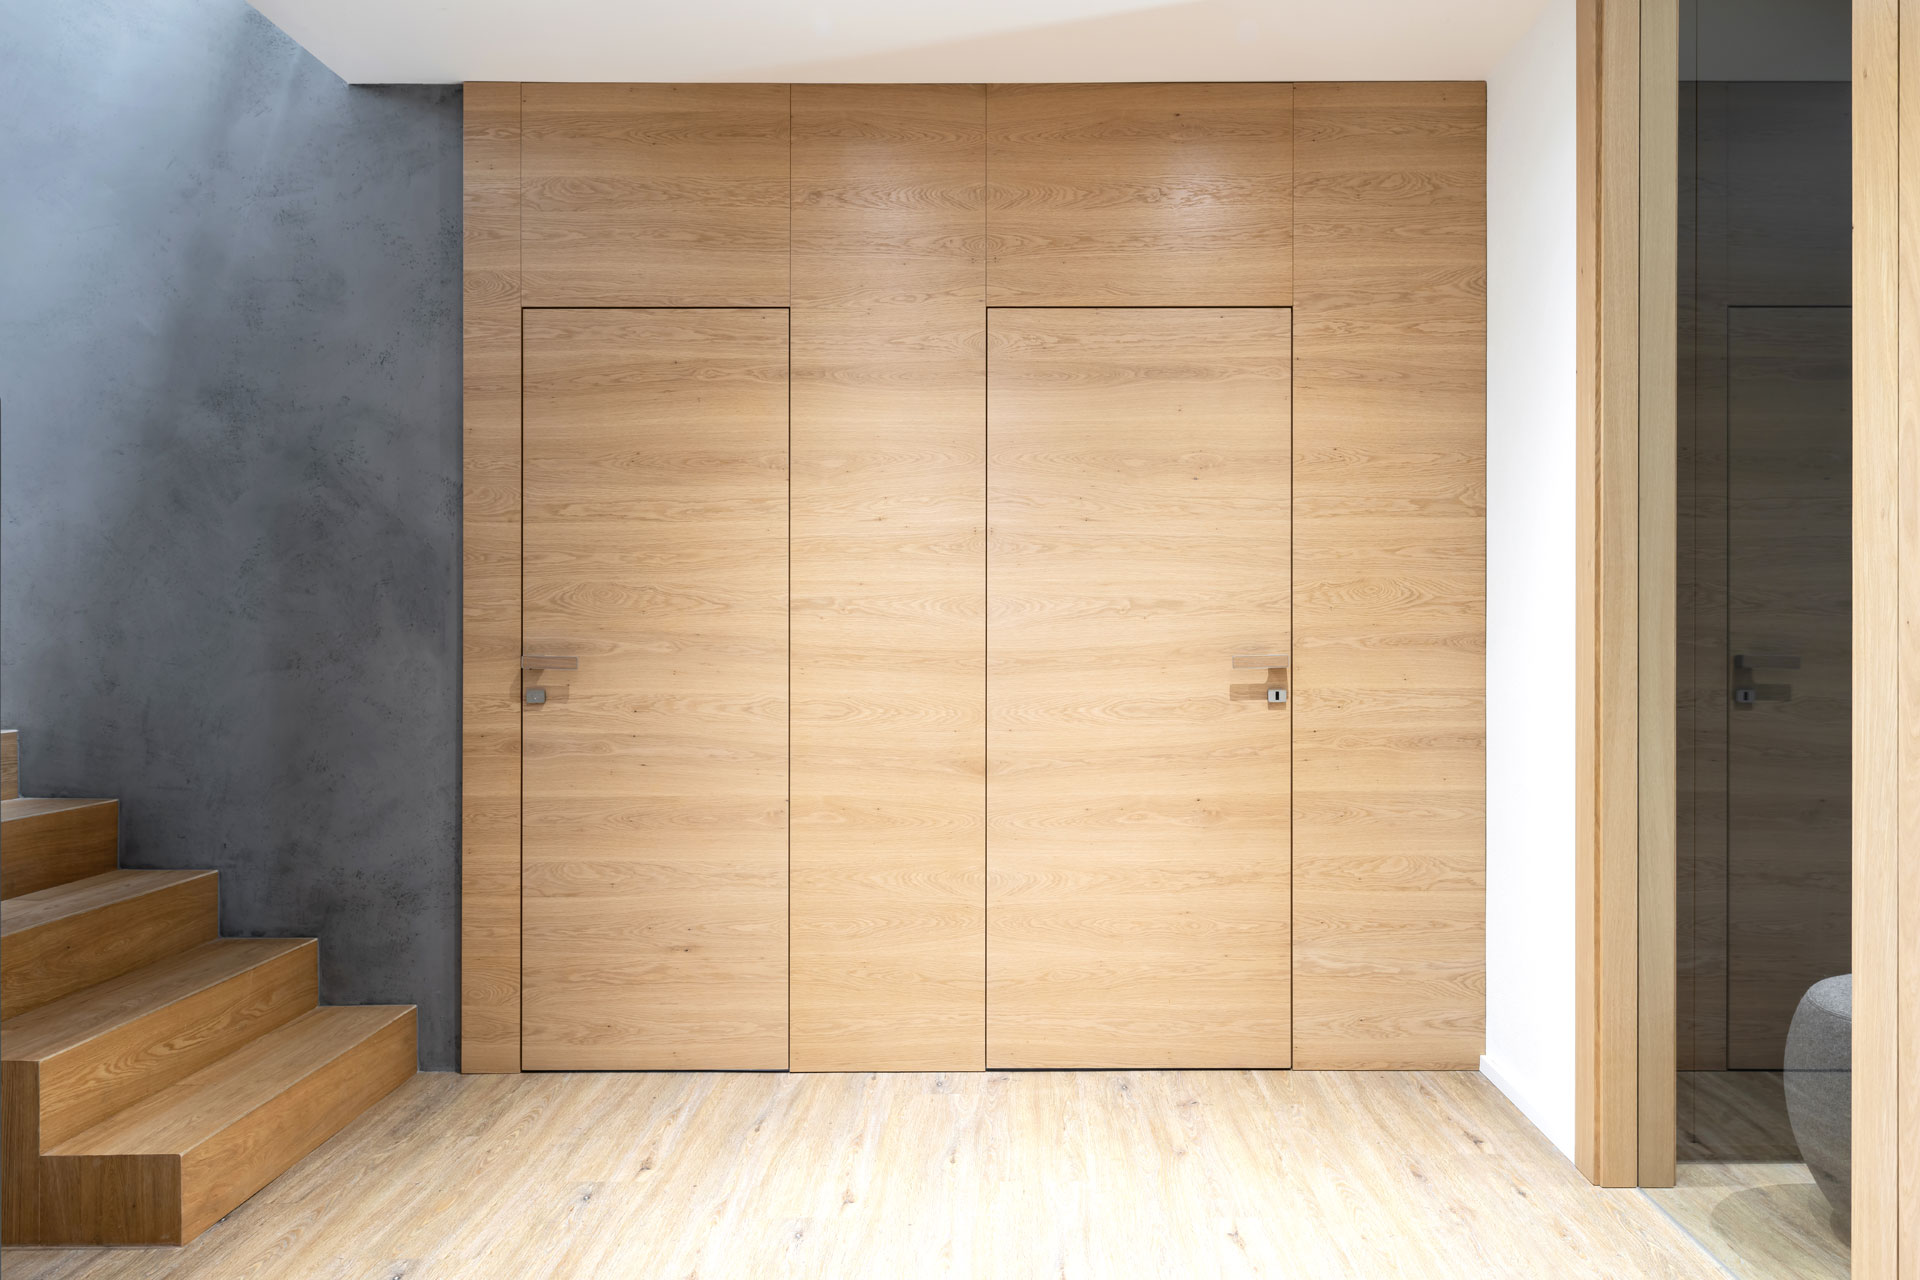 Hanák Furniture Realization of interior doors